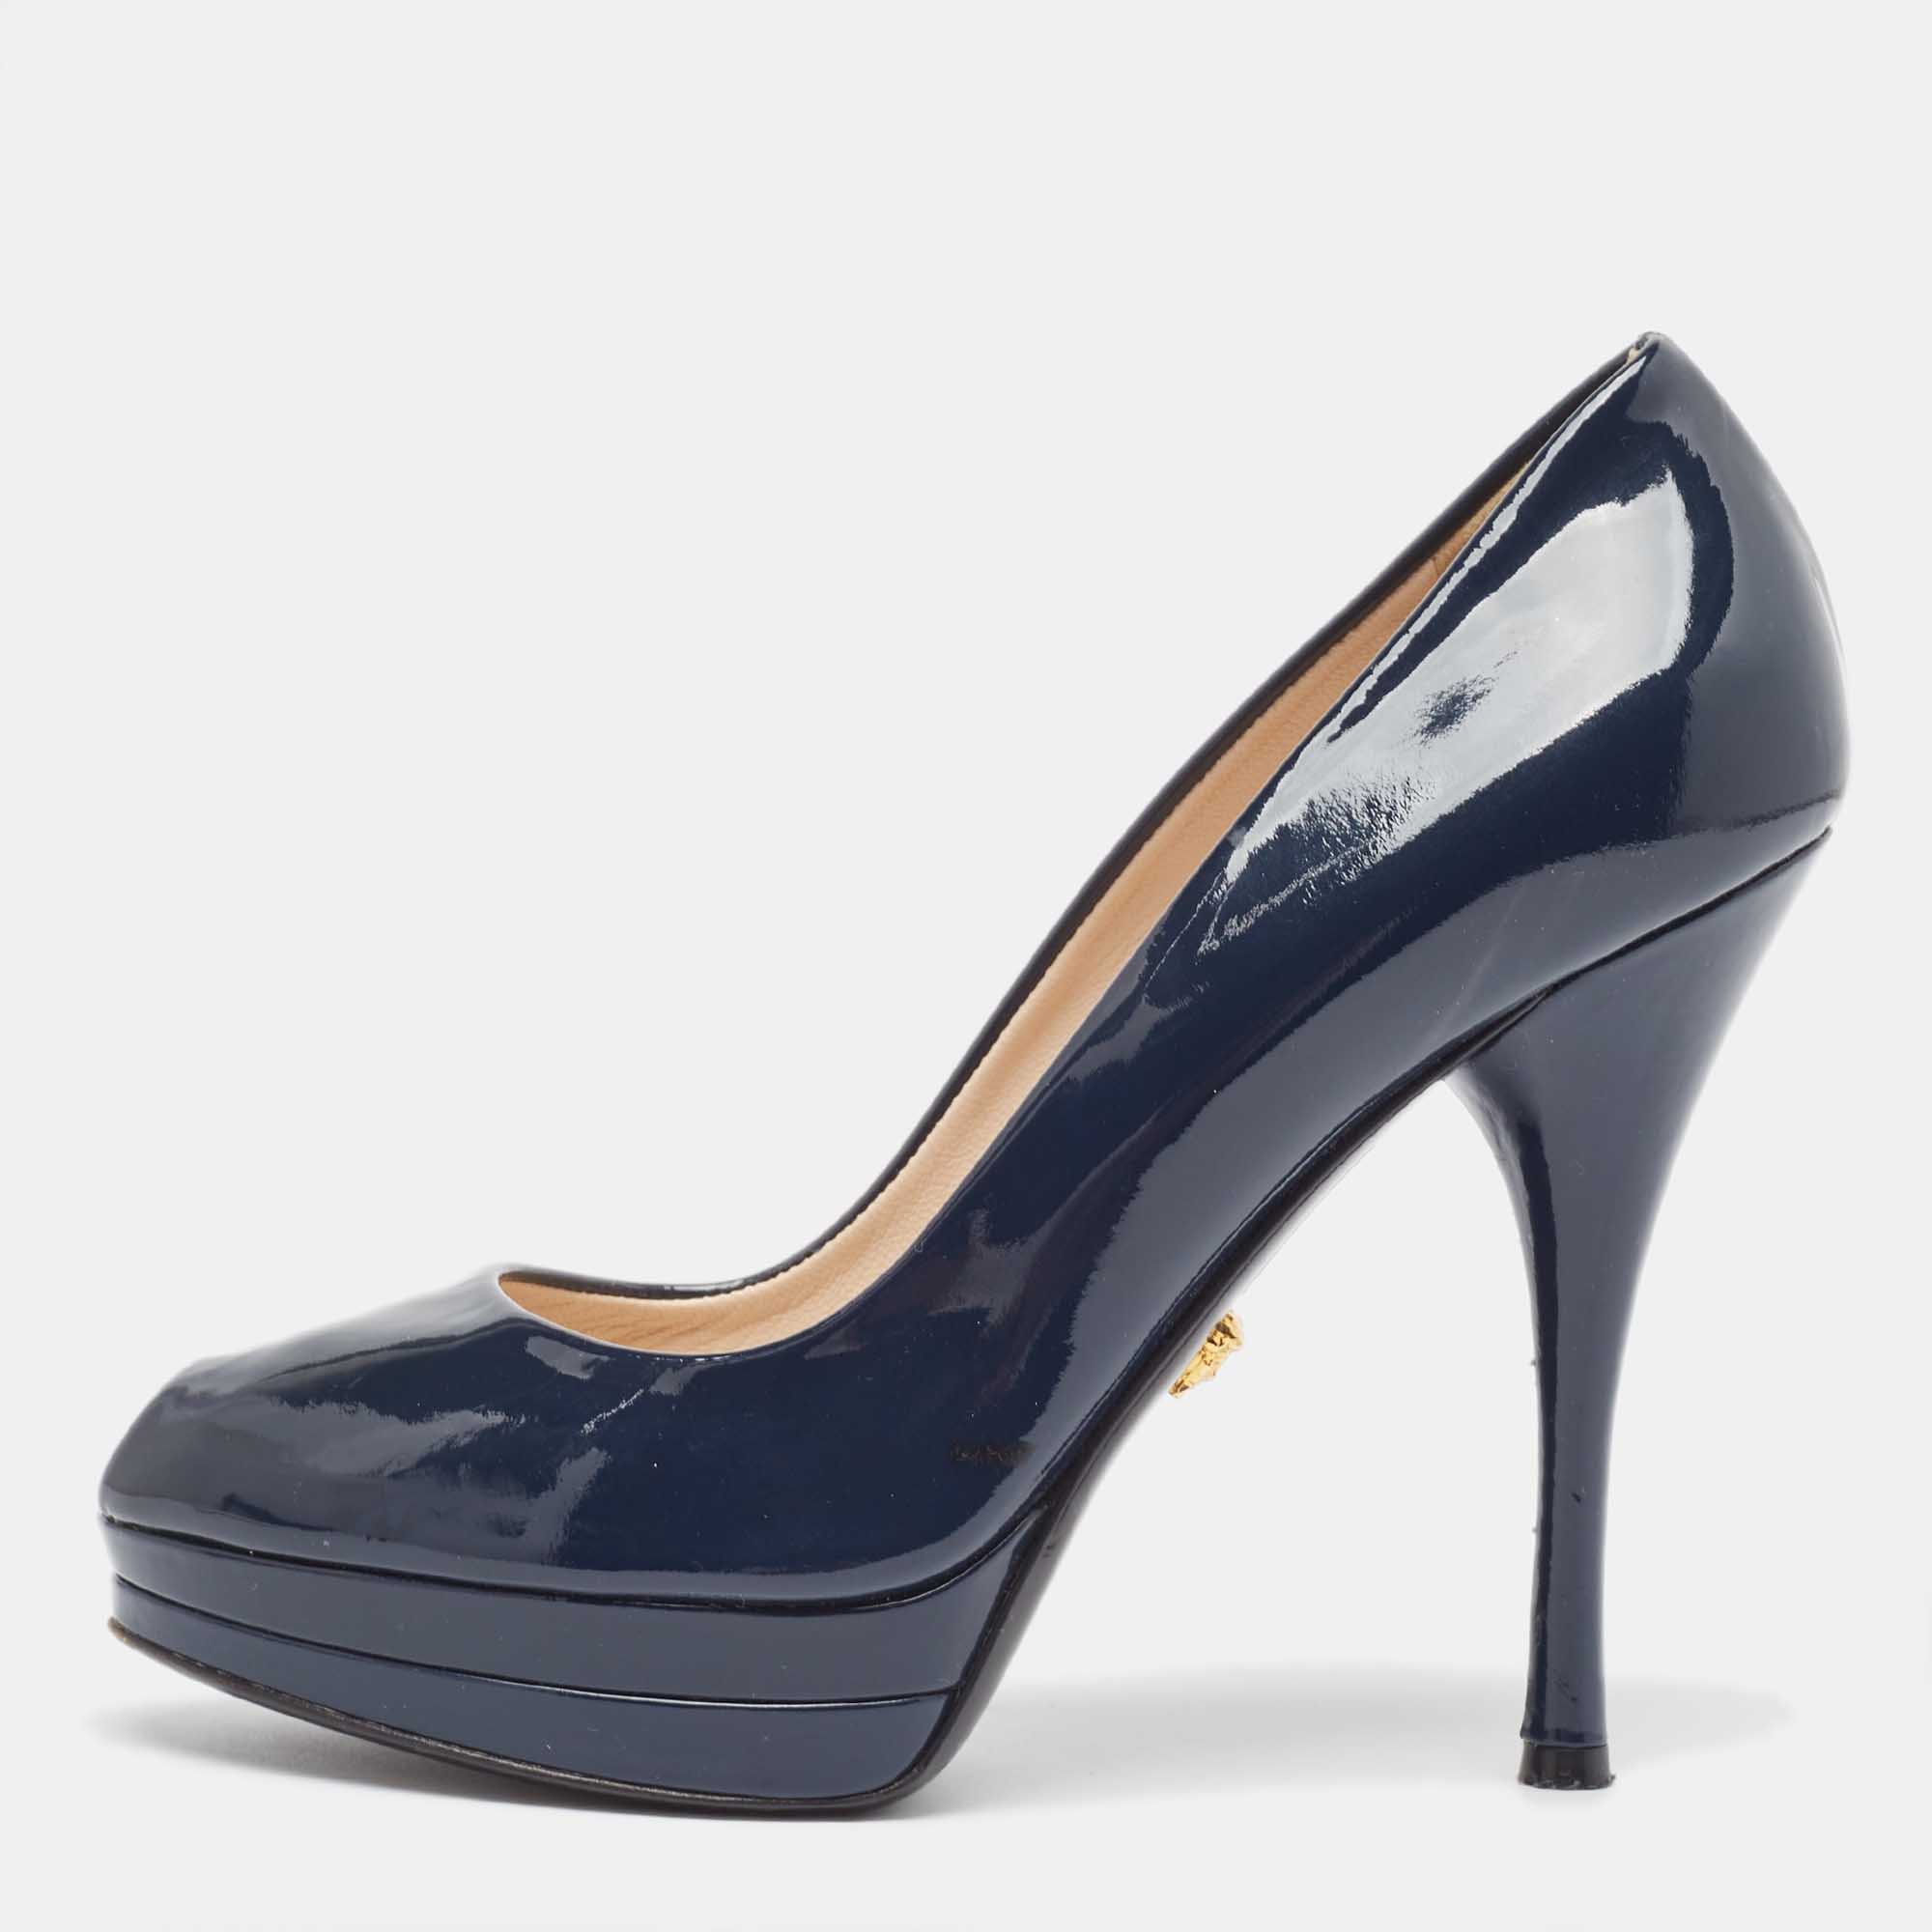 Versace black patent leather peep toe pumps size 37